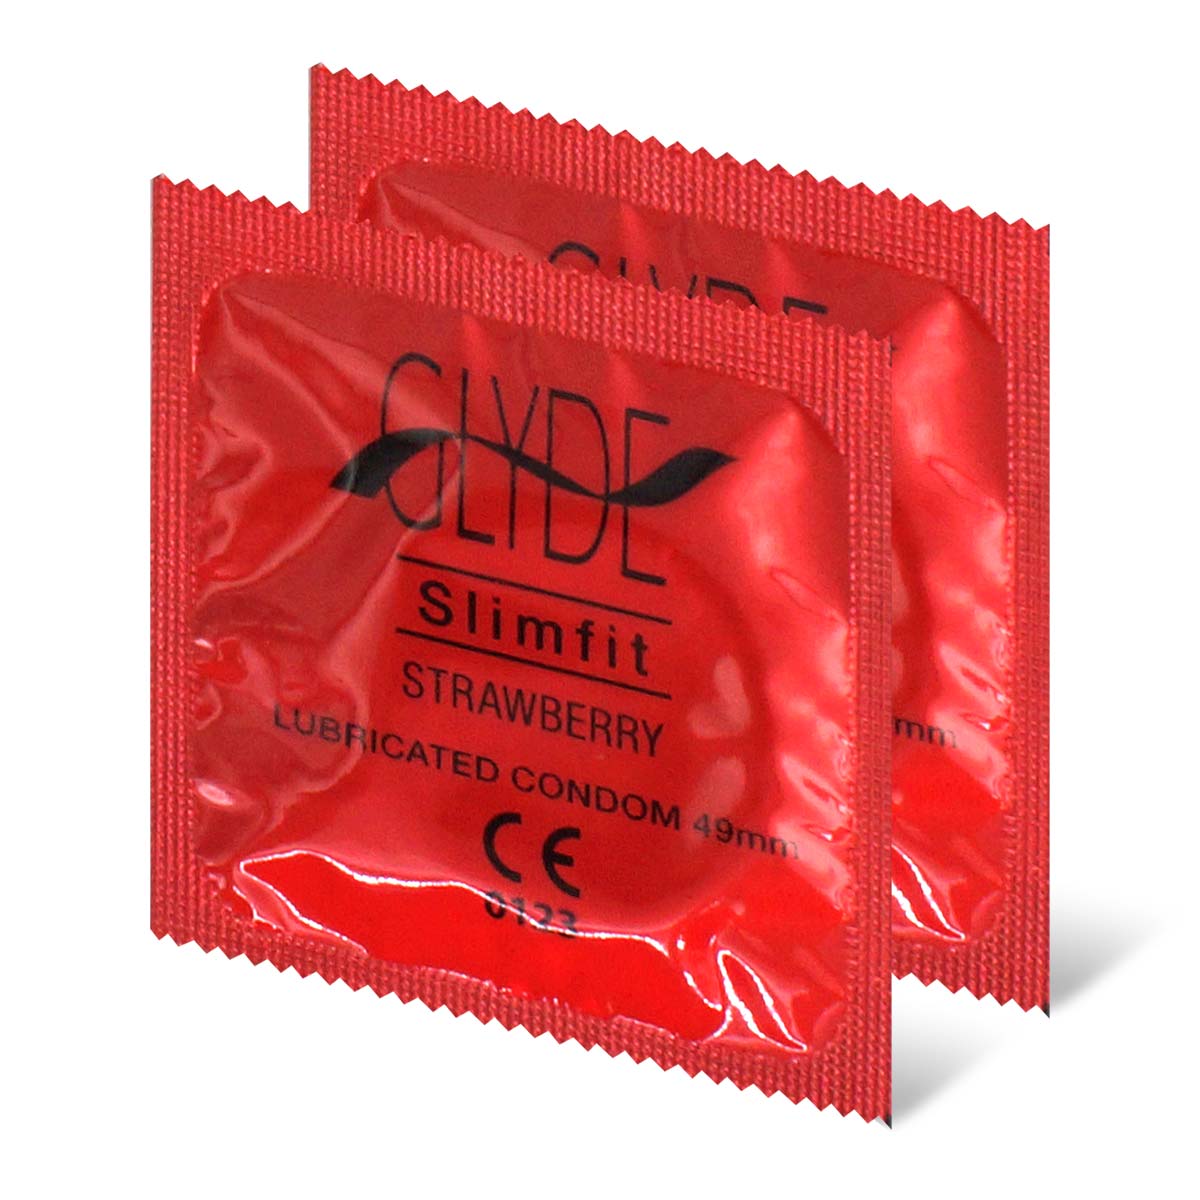 Glyde Vegan Condom Slimfit Strawberry 49mm 2's Pack Latex Condom-p_1